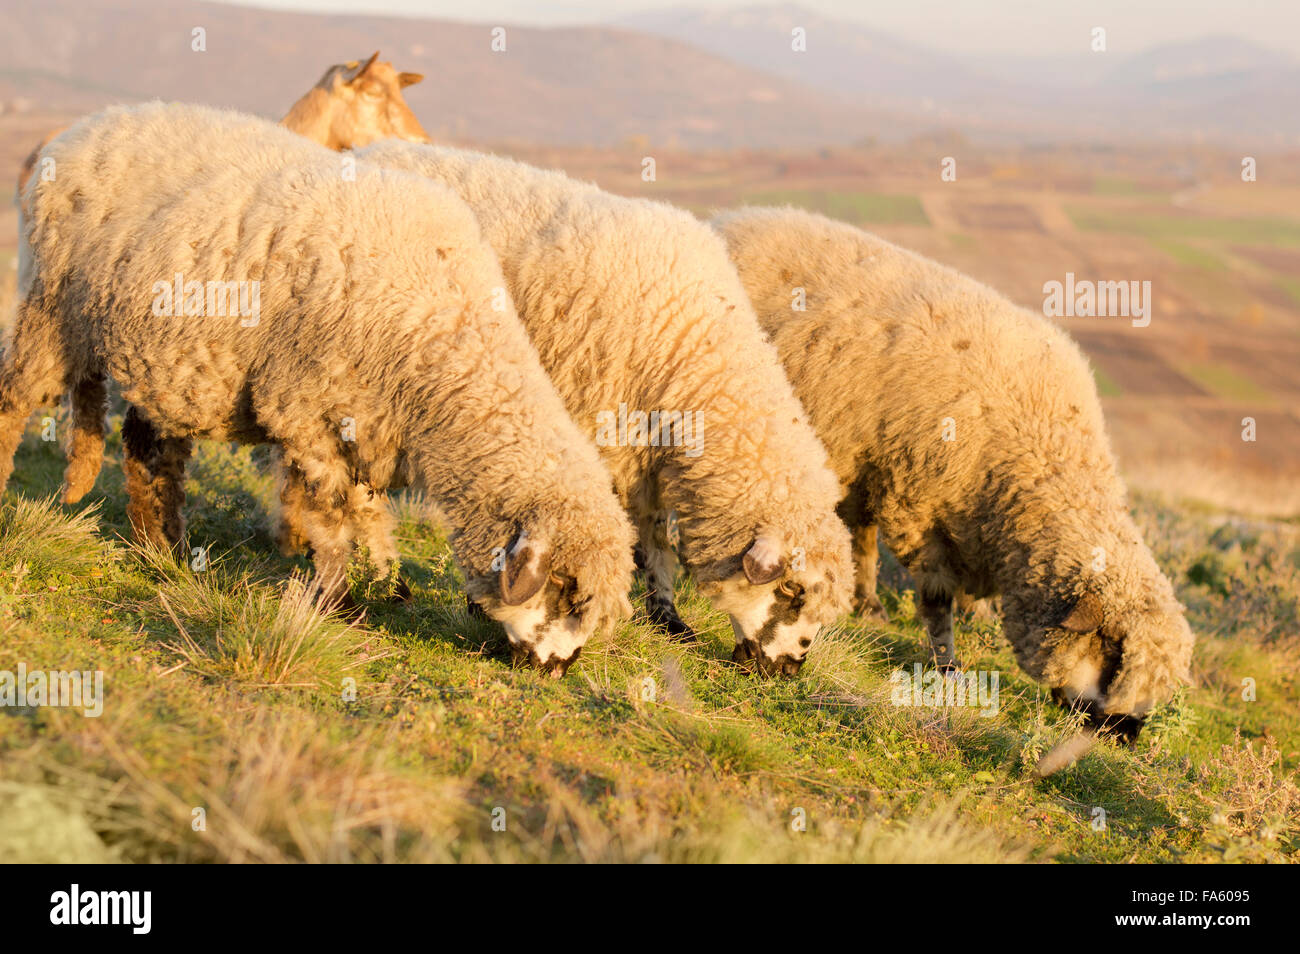 Group of sheep grazing grass on a beautiful sunlit field Stock Photo